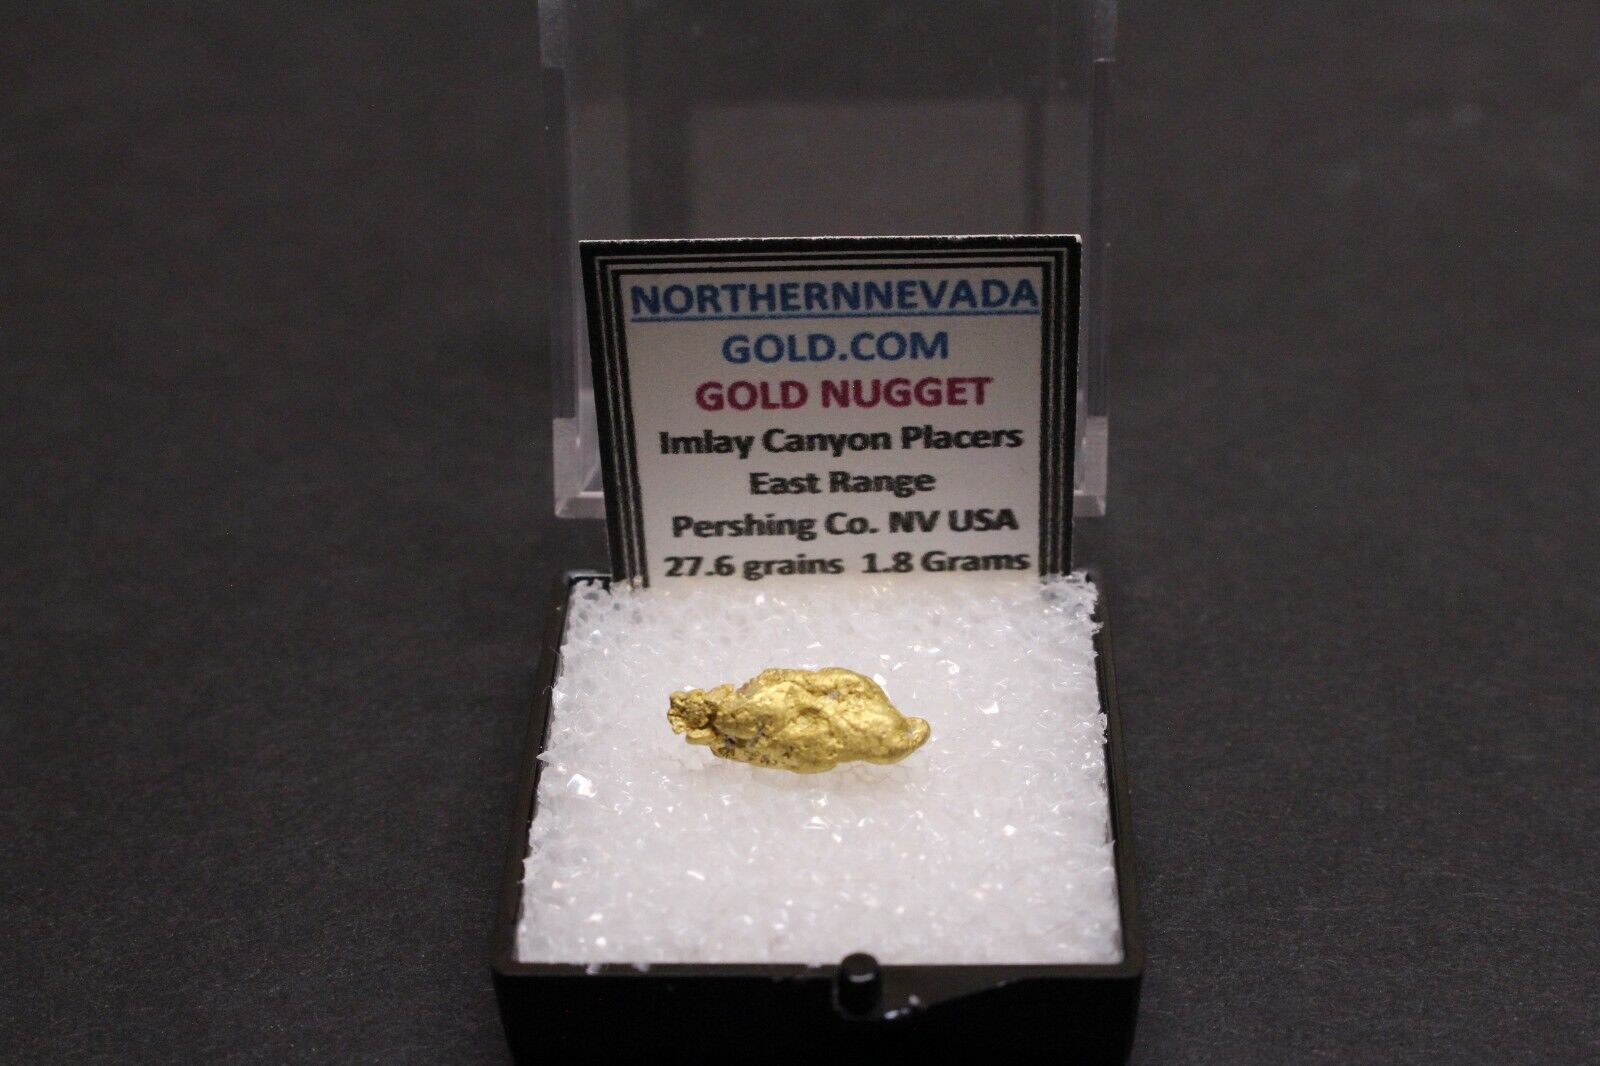 Gold nugget 1.8 Grams Imlay Canyon Placers  East Range  Pershing Co. NV Без бренда - фотография #5